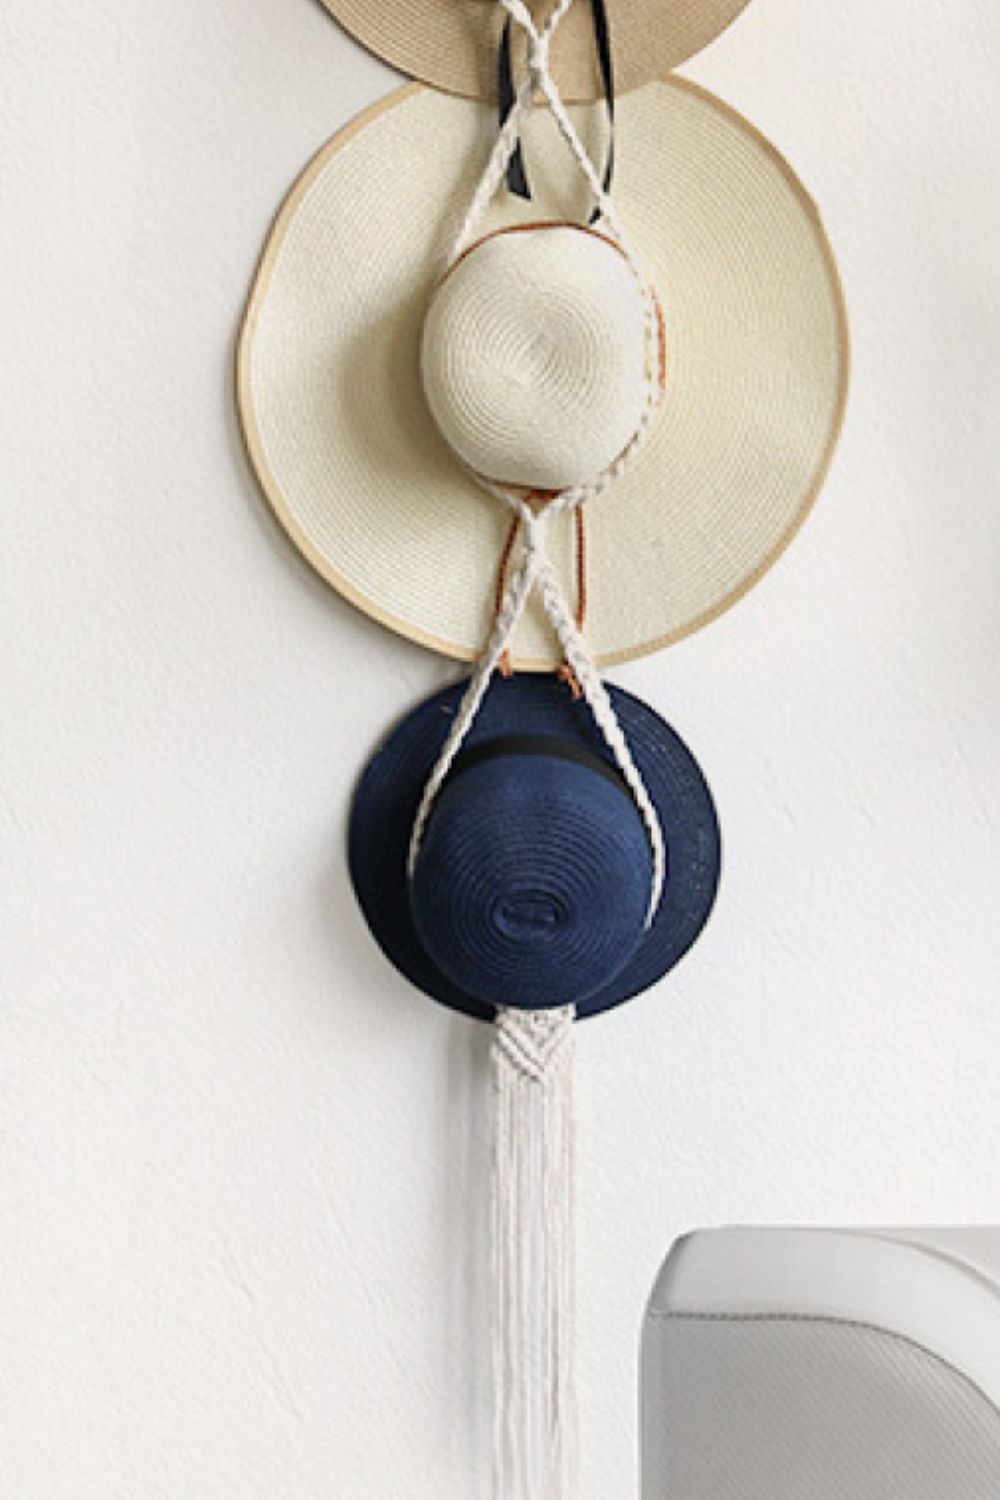 Hat Wall Hanger - Triple Hat – The Hat Store